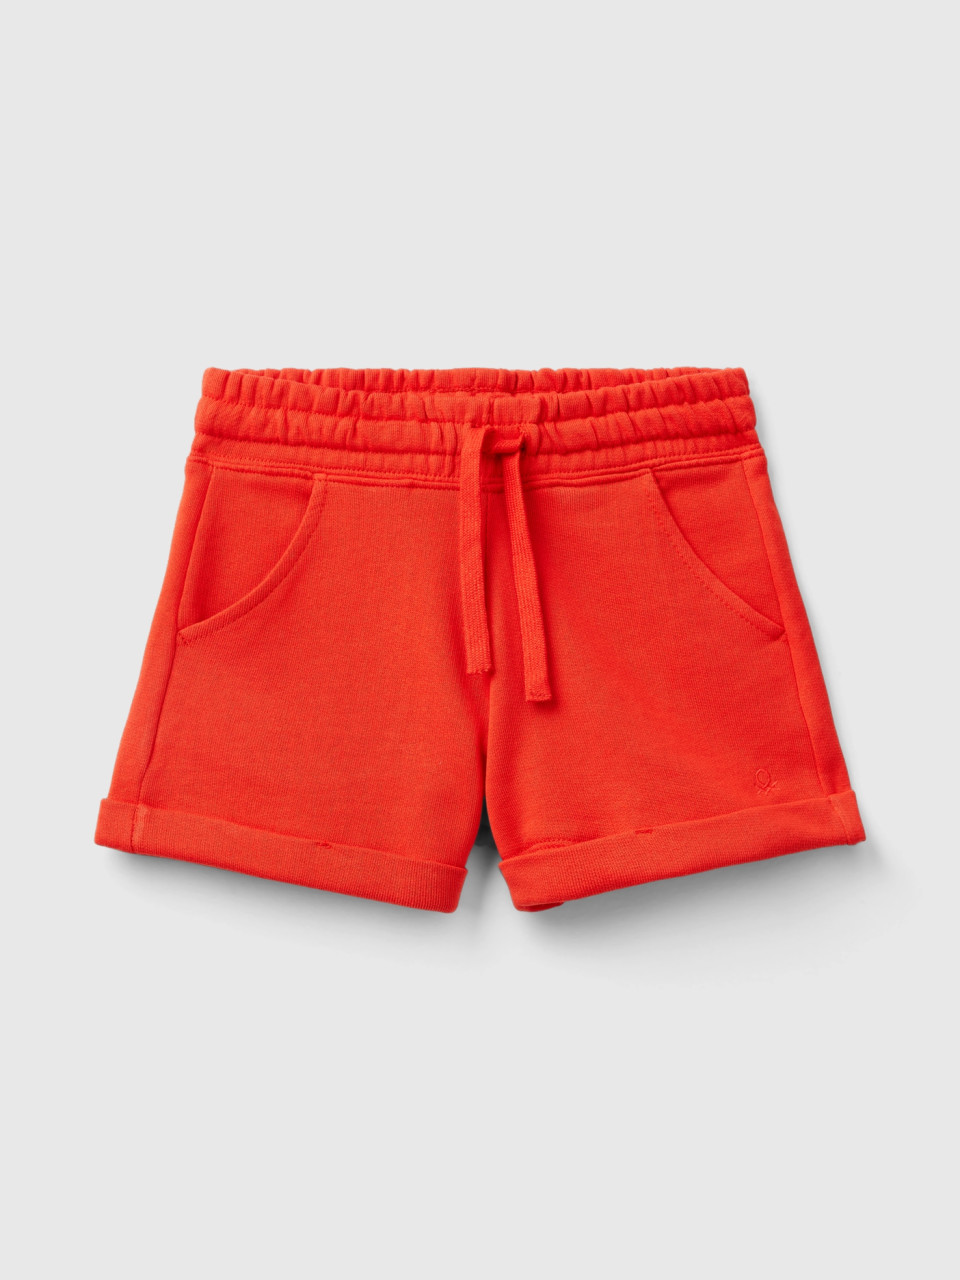 Benetton, 100% Cotton Sweat Shorts, Red, Kids